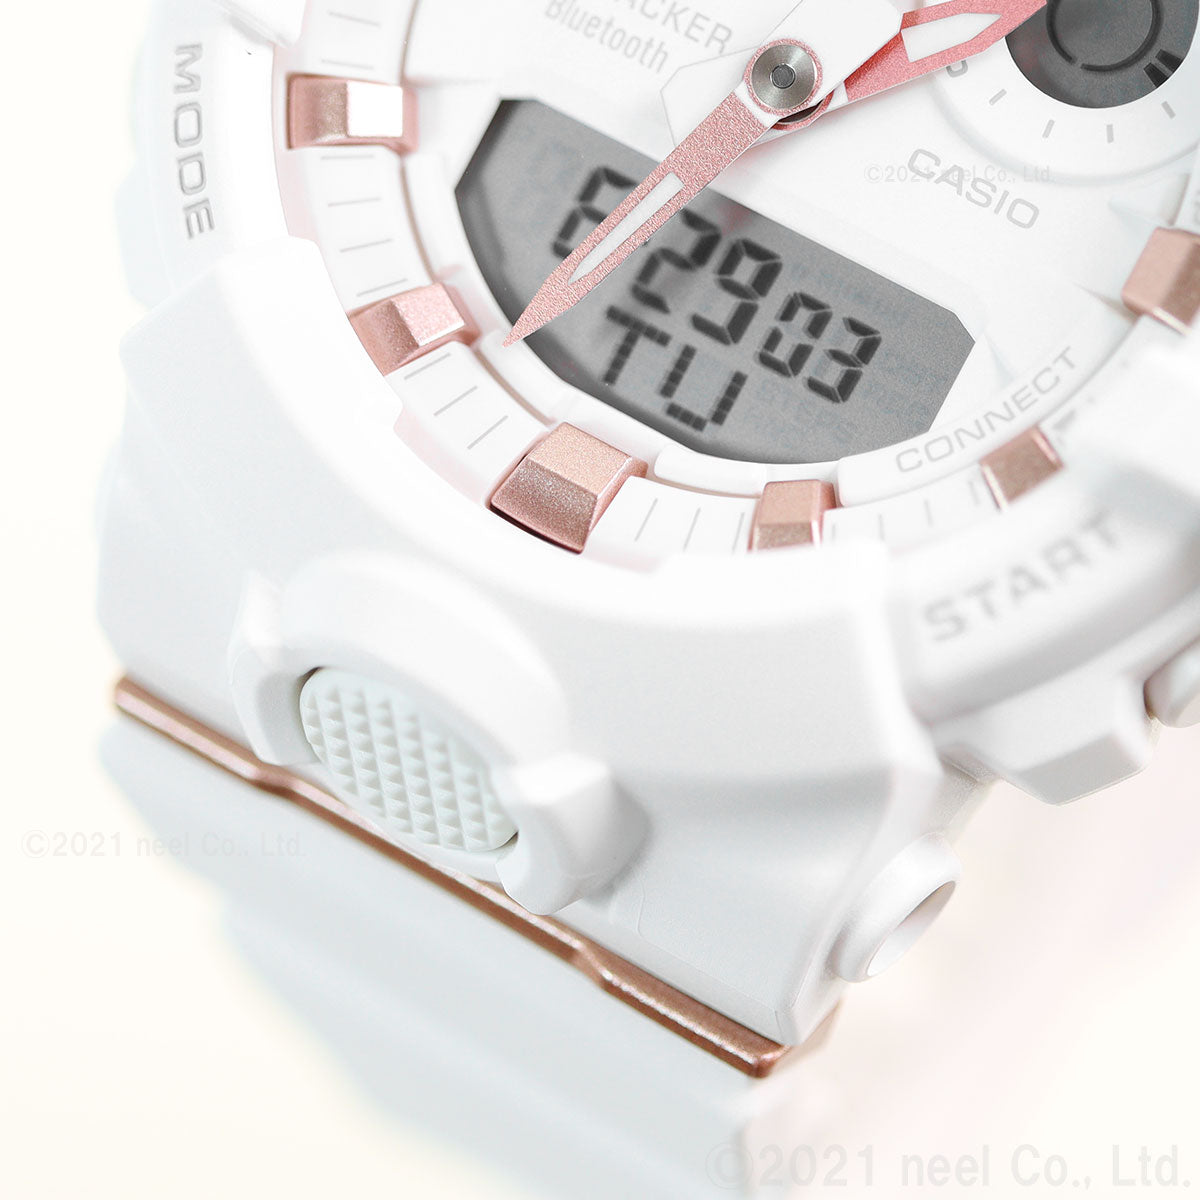 G-SHOCK カシオ Gショック CASIO 腕時計 メンズ GMA-B800-7AJR